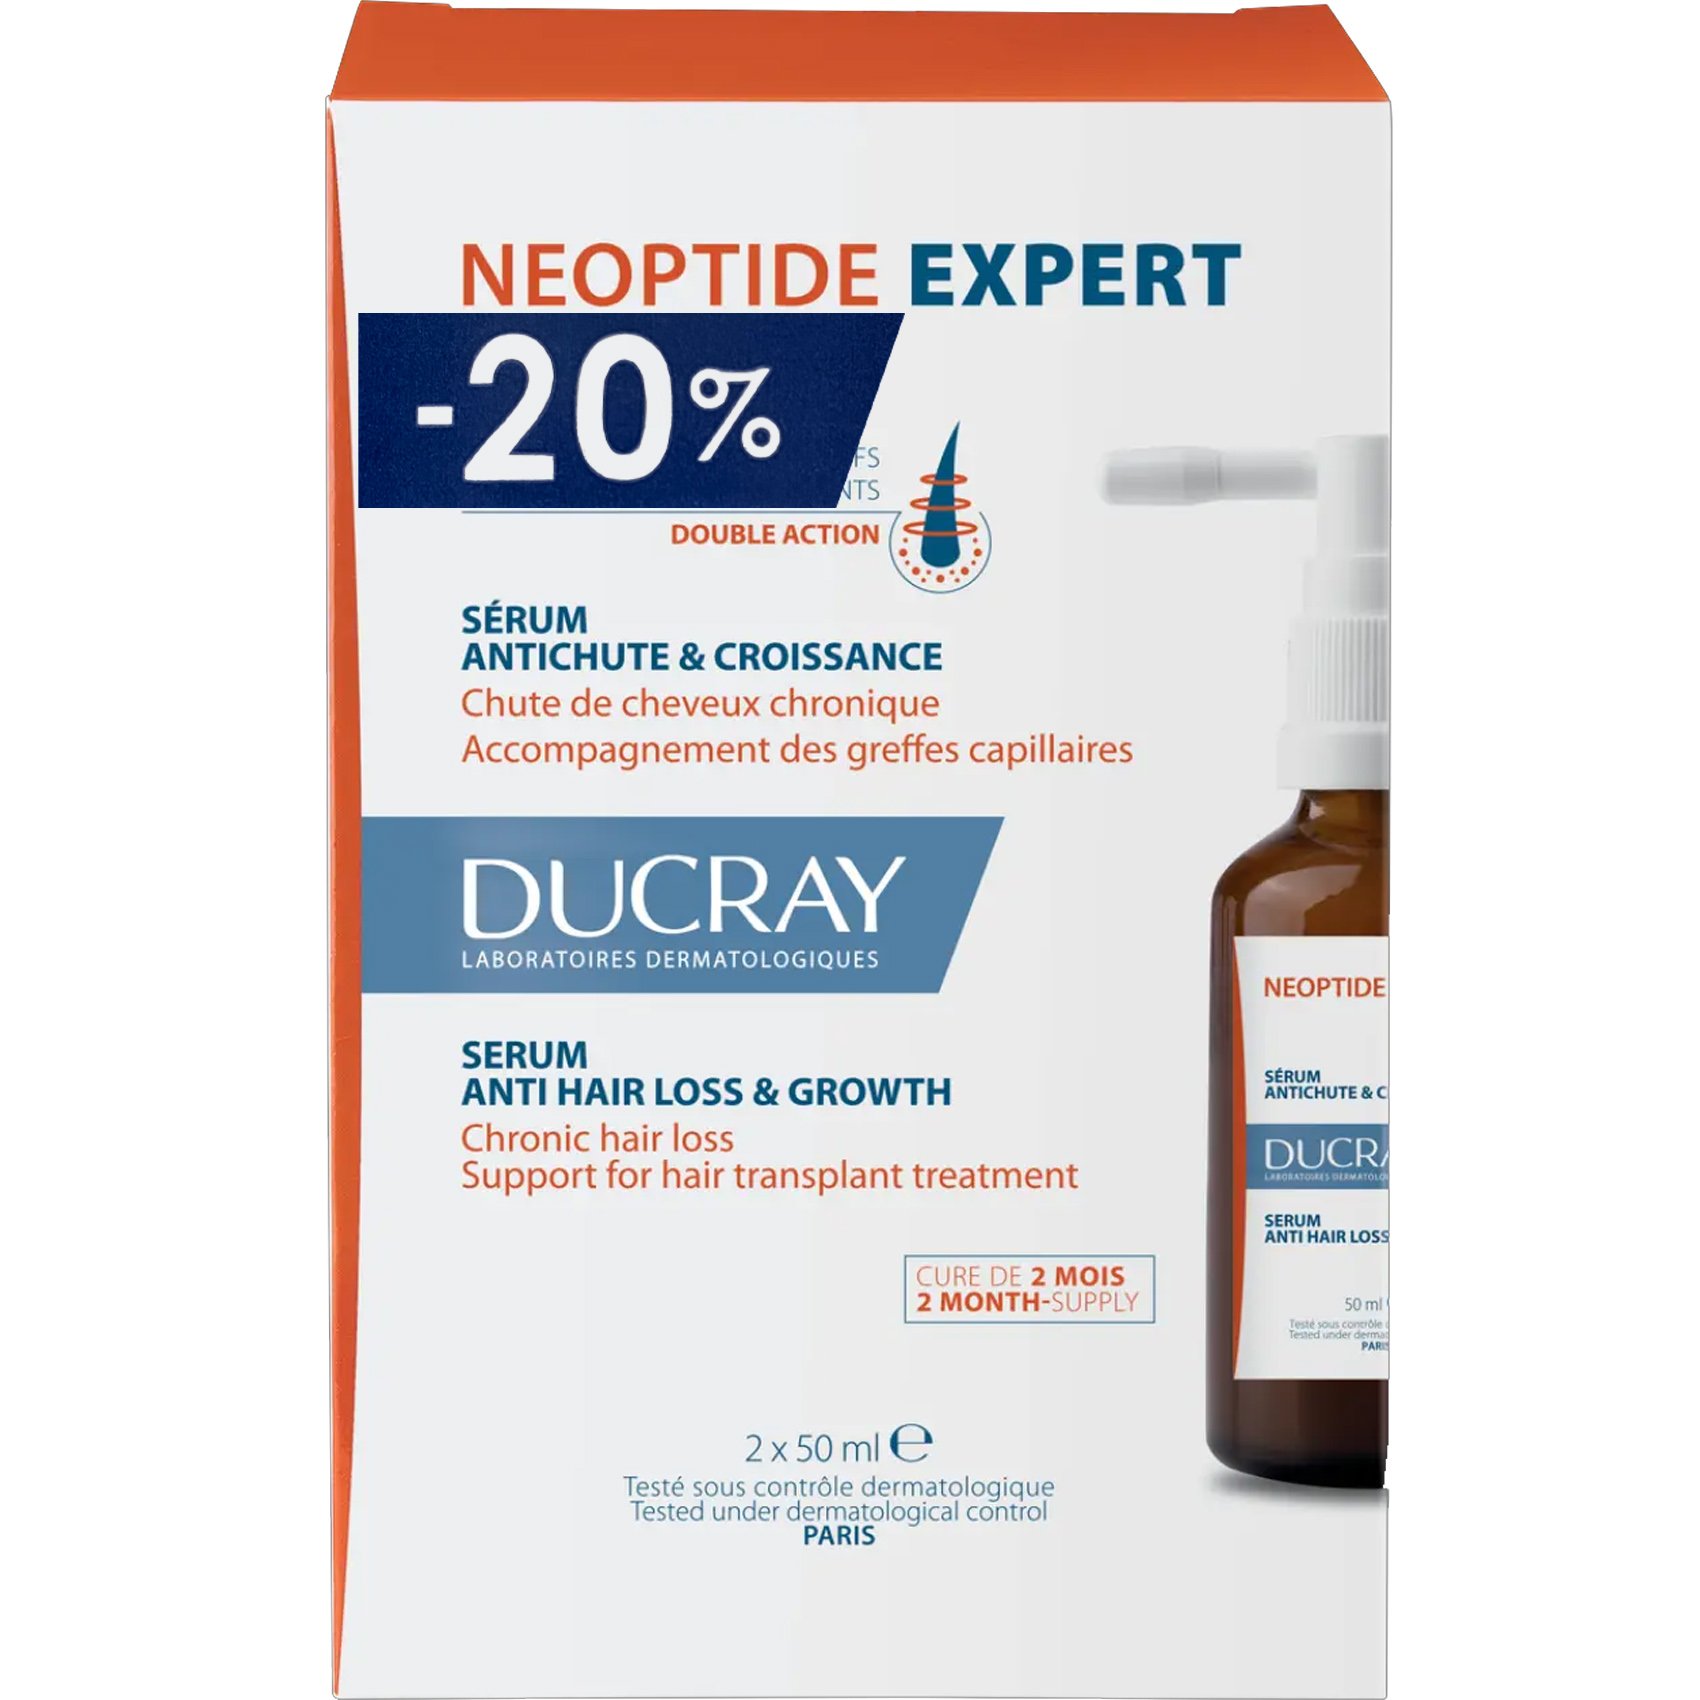 Ducray Neoptide Expert Double Action Anti-Hair Loss Serum Ορός με Δράση Κατά της Τριχόπτωσης που Προάγει την Ανάπτυξη των Μαλλιών 2x50ml σε Ειδική Τιμή 56030